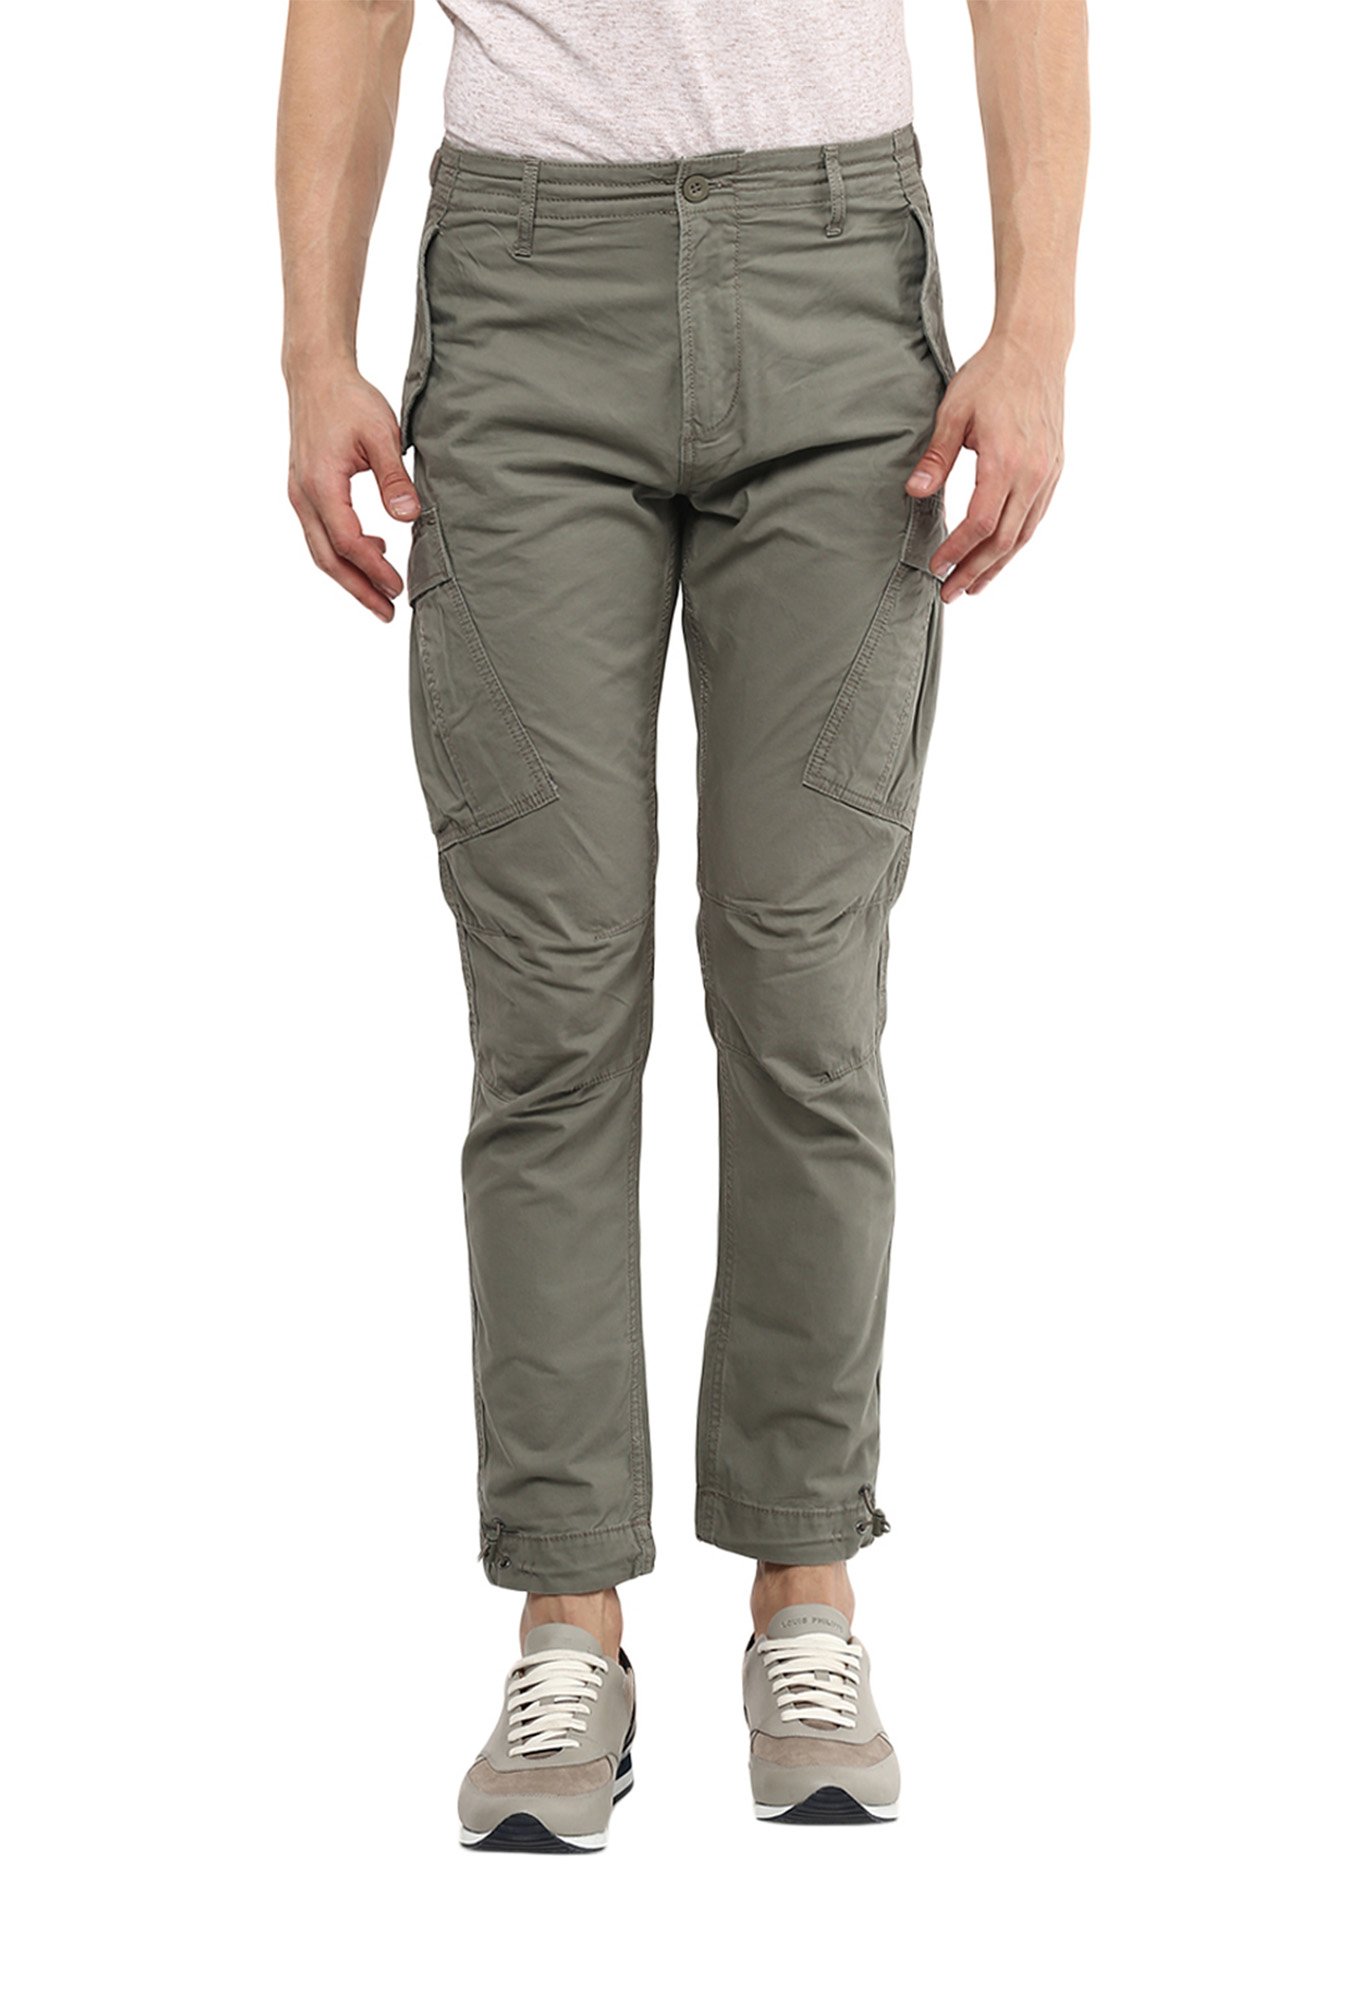 Buy Tan Brown Trousers & Pants for Men by Celio Online | Ajio.com